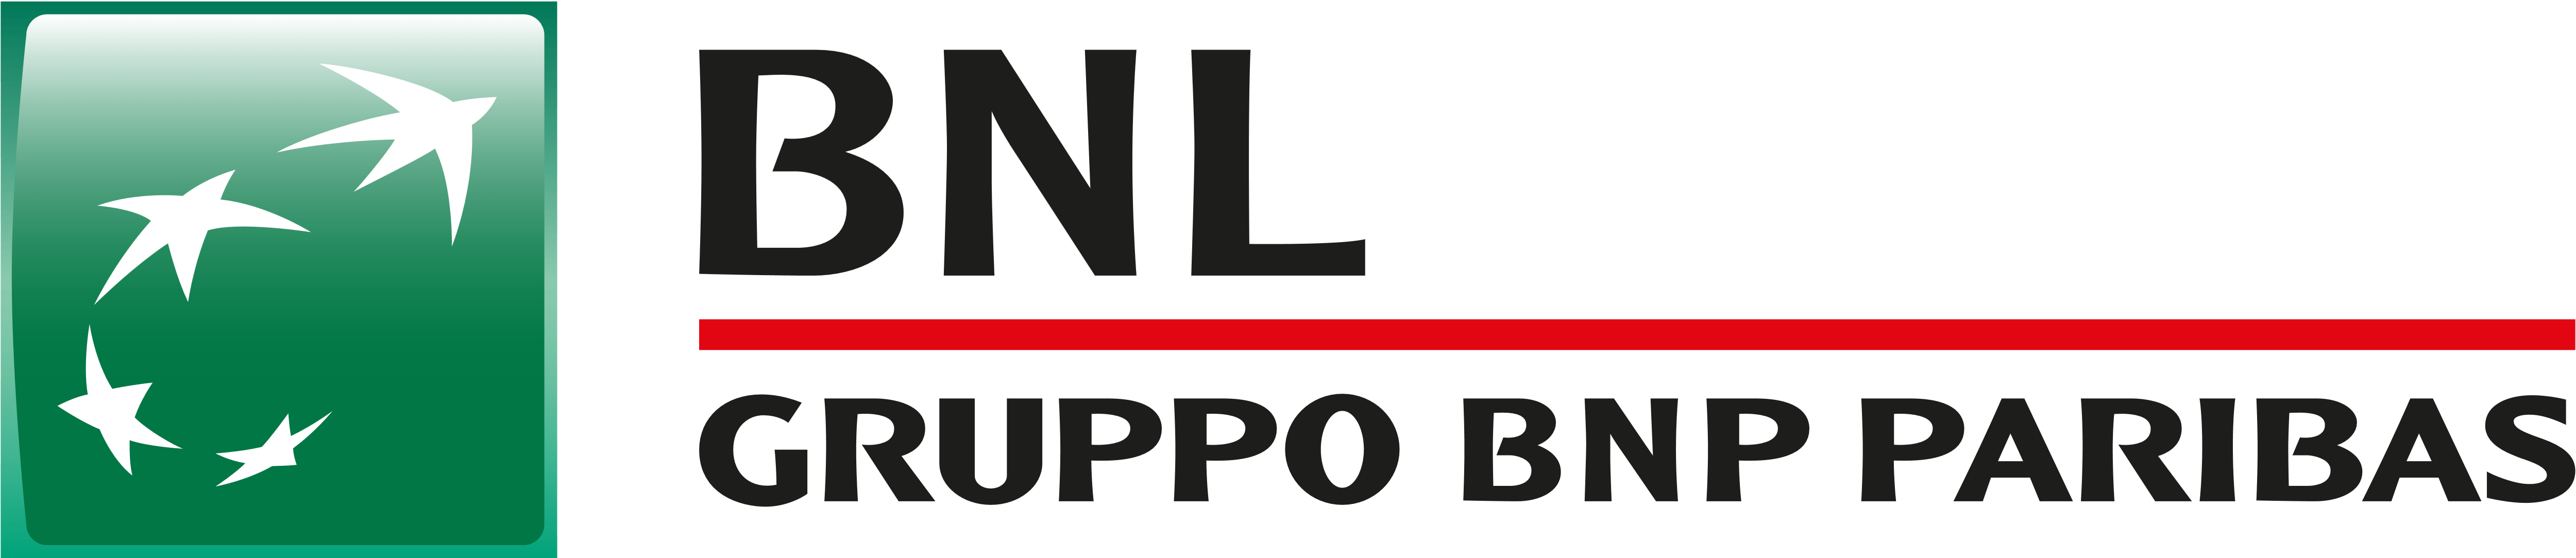 BNL Logo - BNL